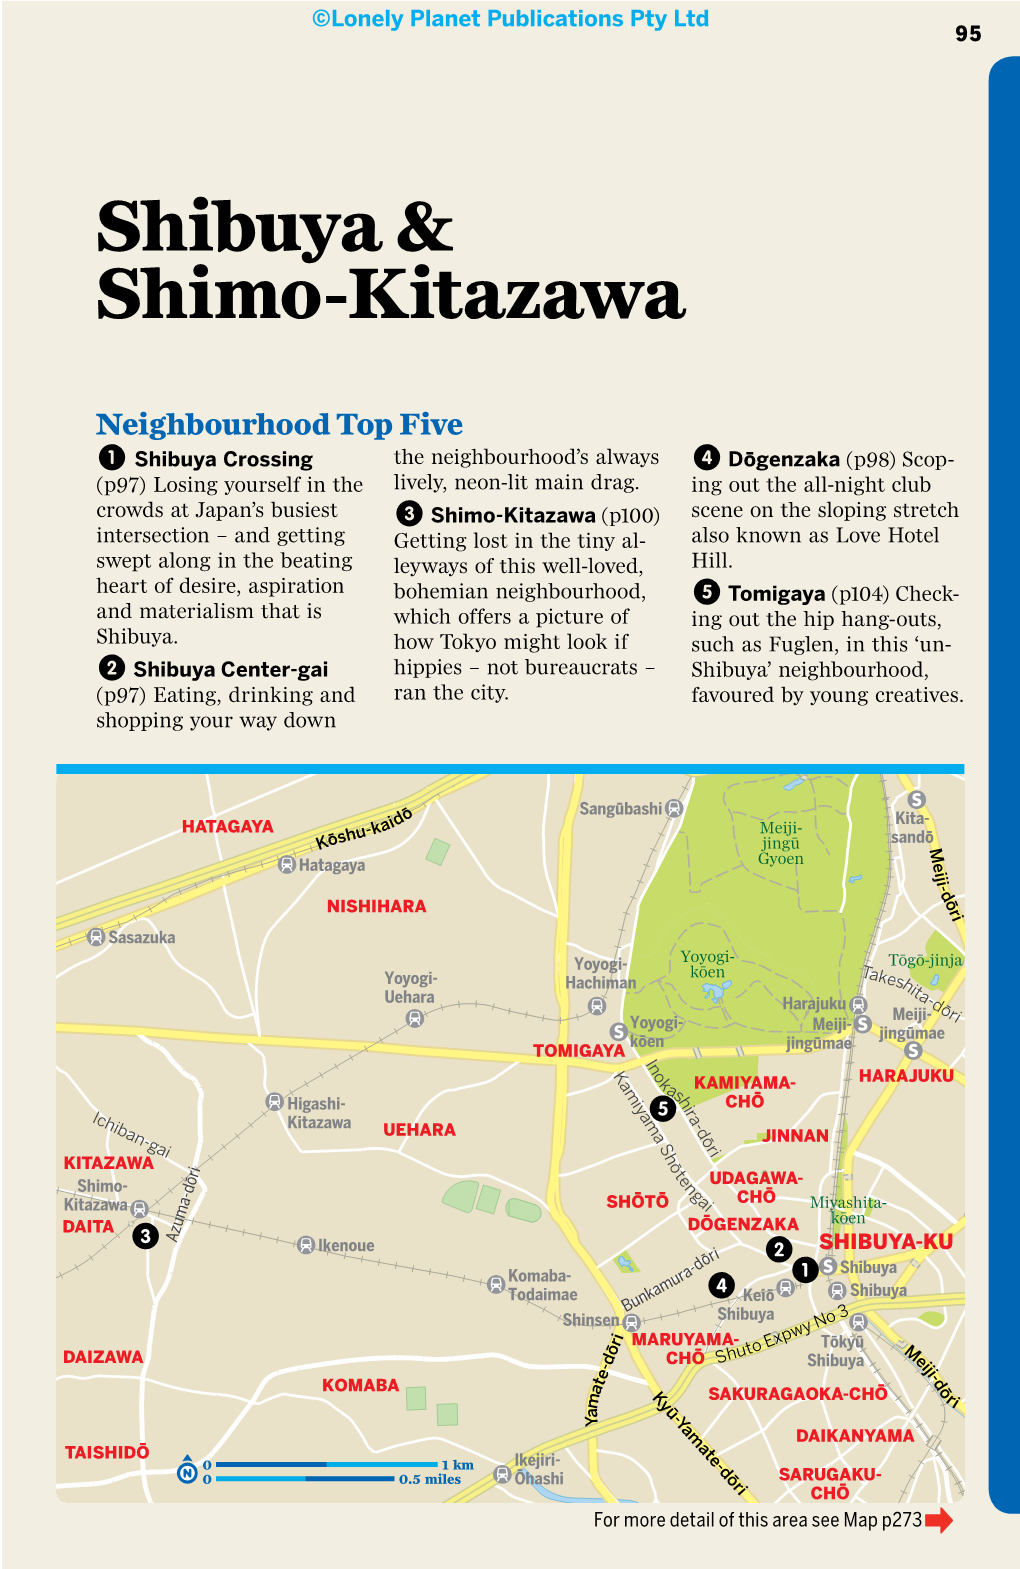 Shibuya & Shimo-Kitazawa